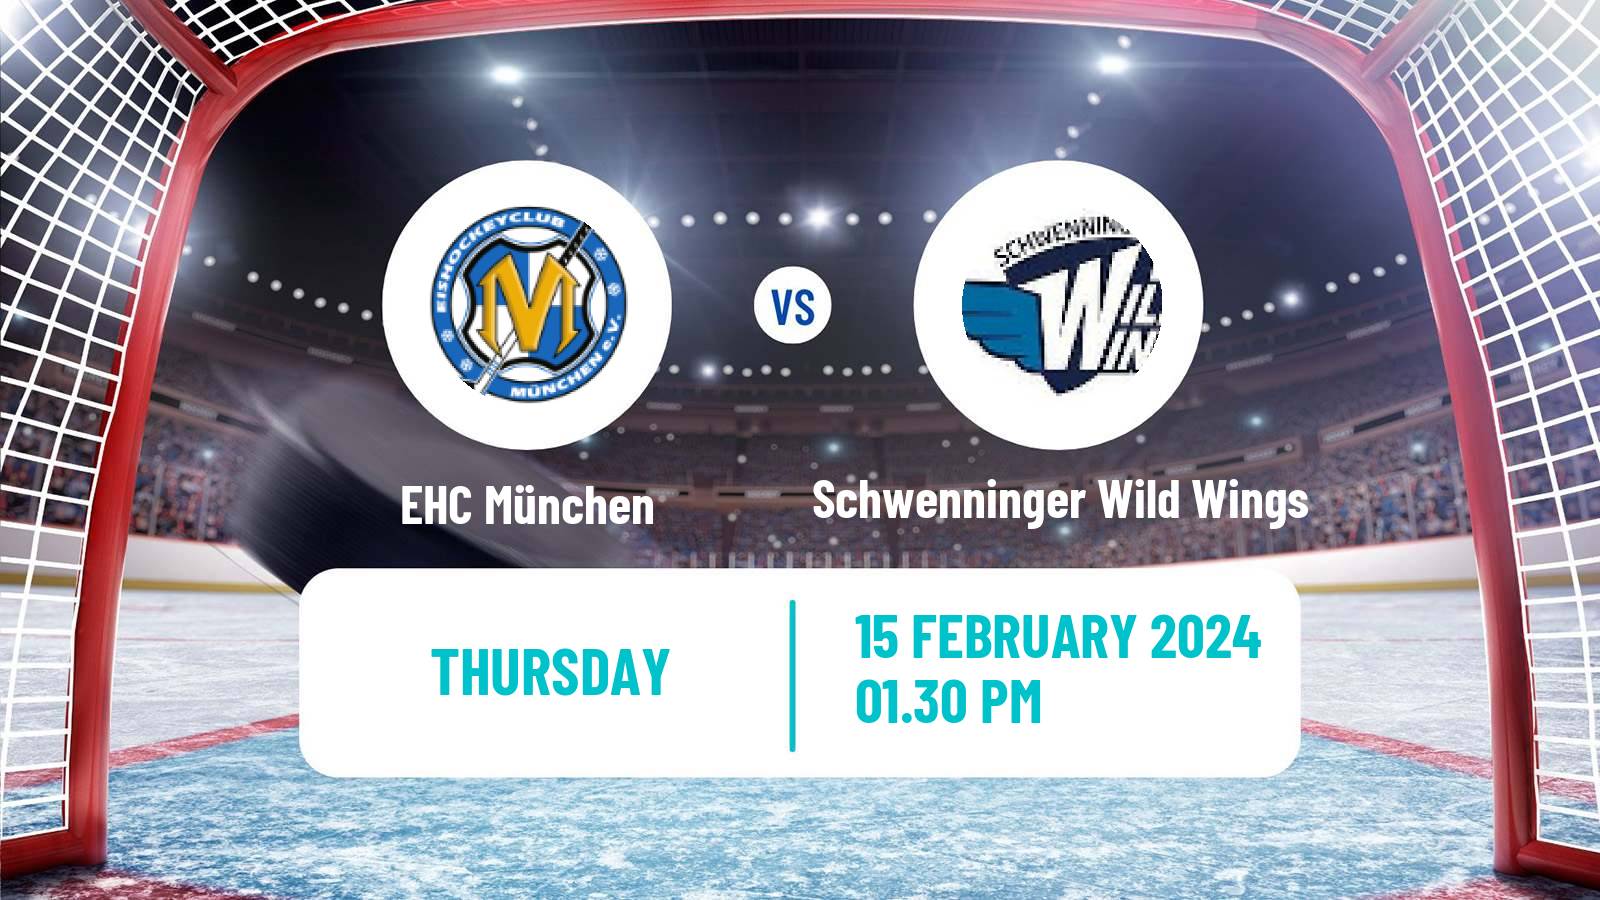 Hockey German Ice Hockey League EHC München - Schwenninger Wild Wings